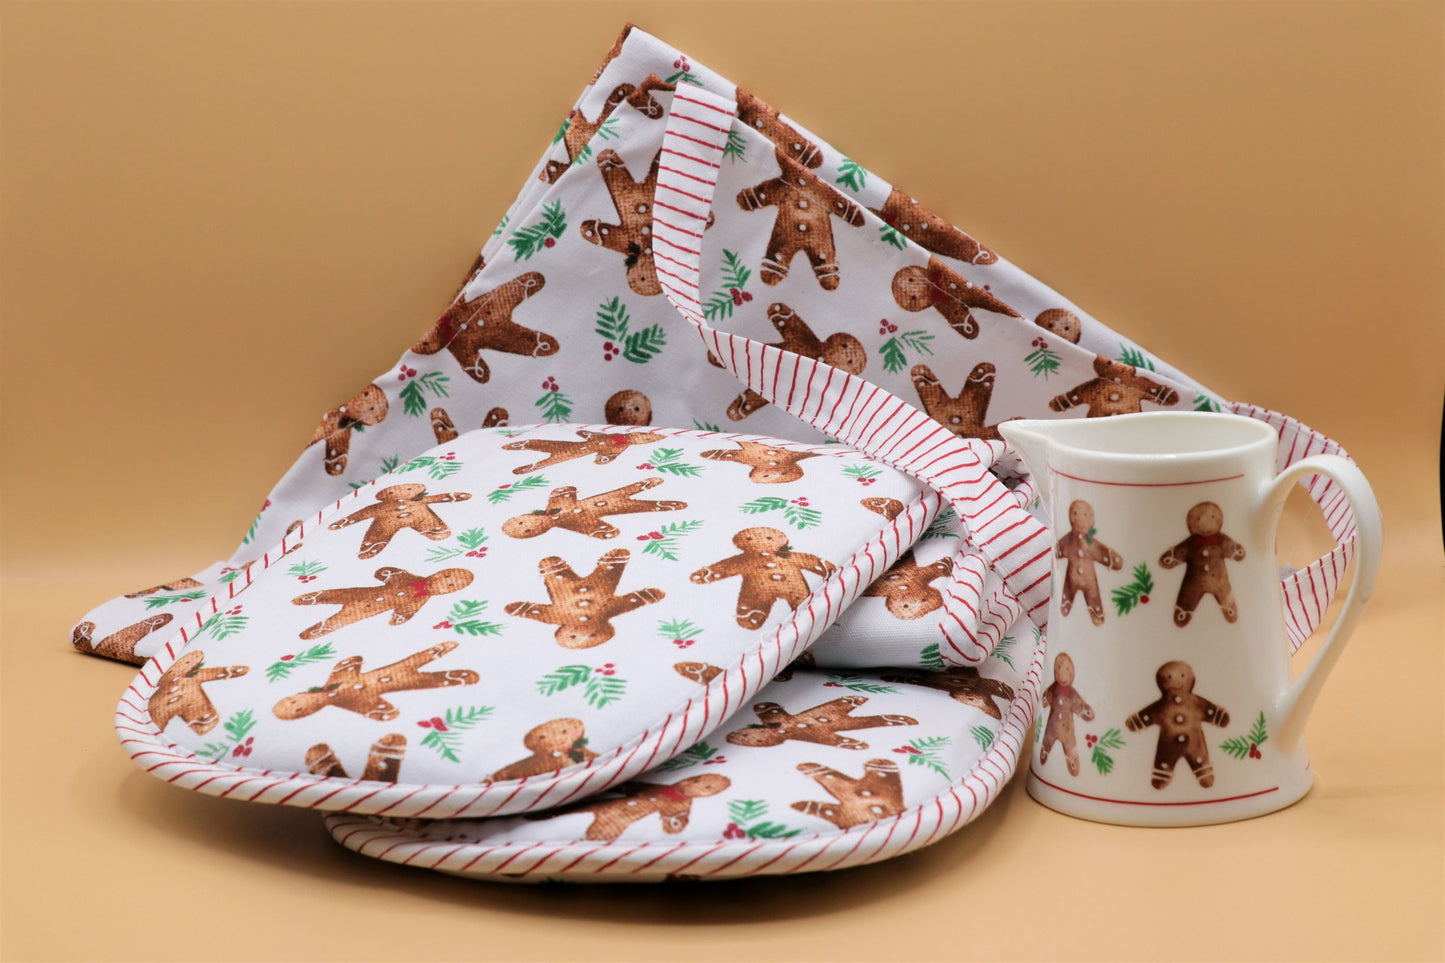 Fabric Oven Gloves, Tea Towel & Apron - Gingerbread Man